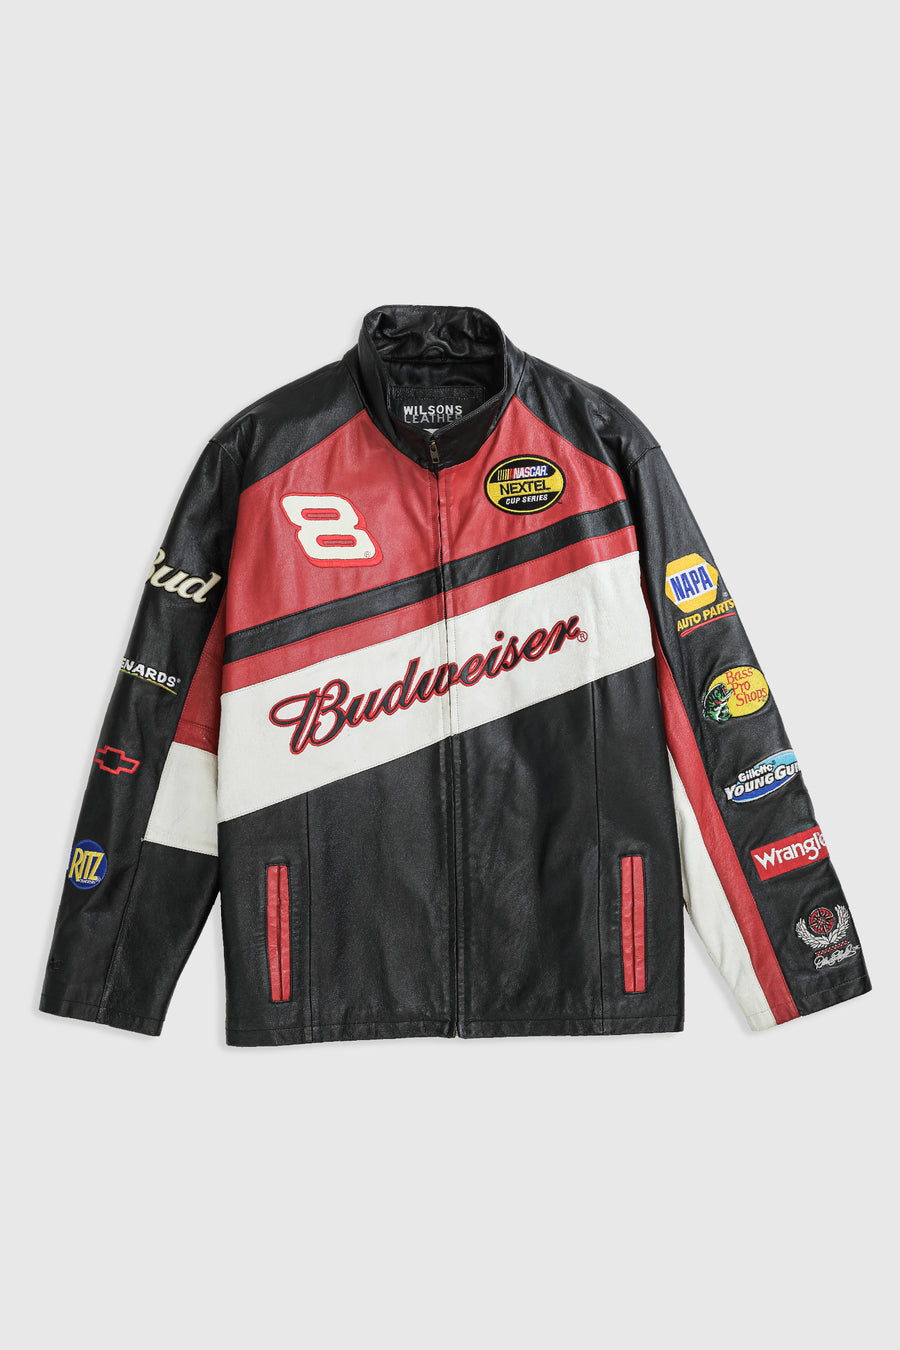 Vintage Racing Leather Jacket